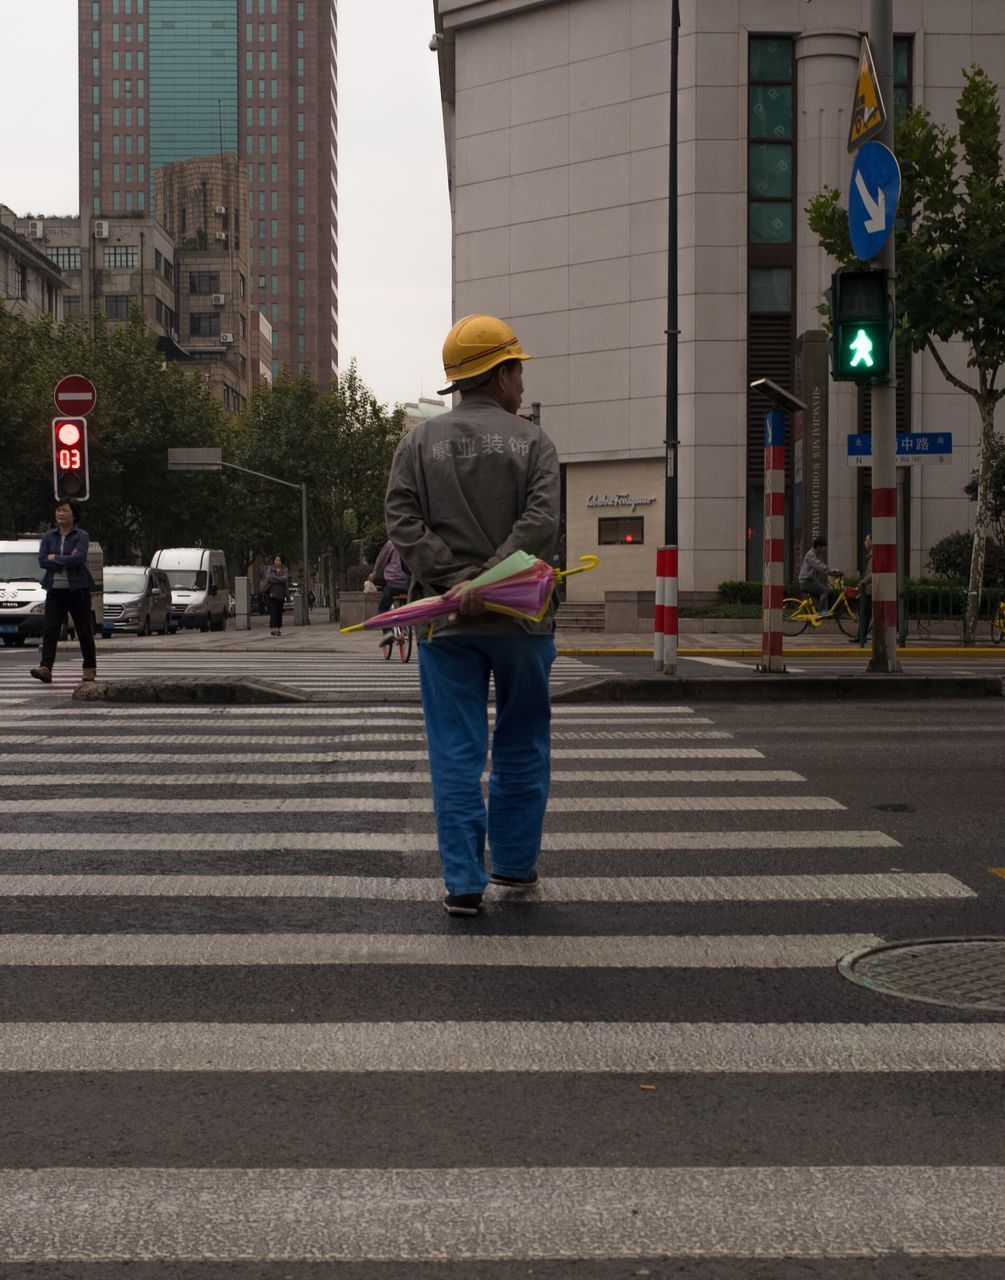 REAR VIEW OF MAN WALKING ON ROAD IN CITY